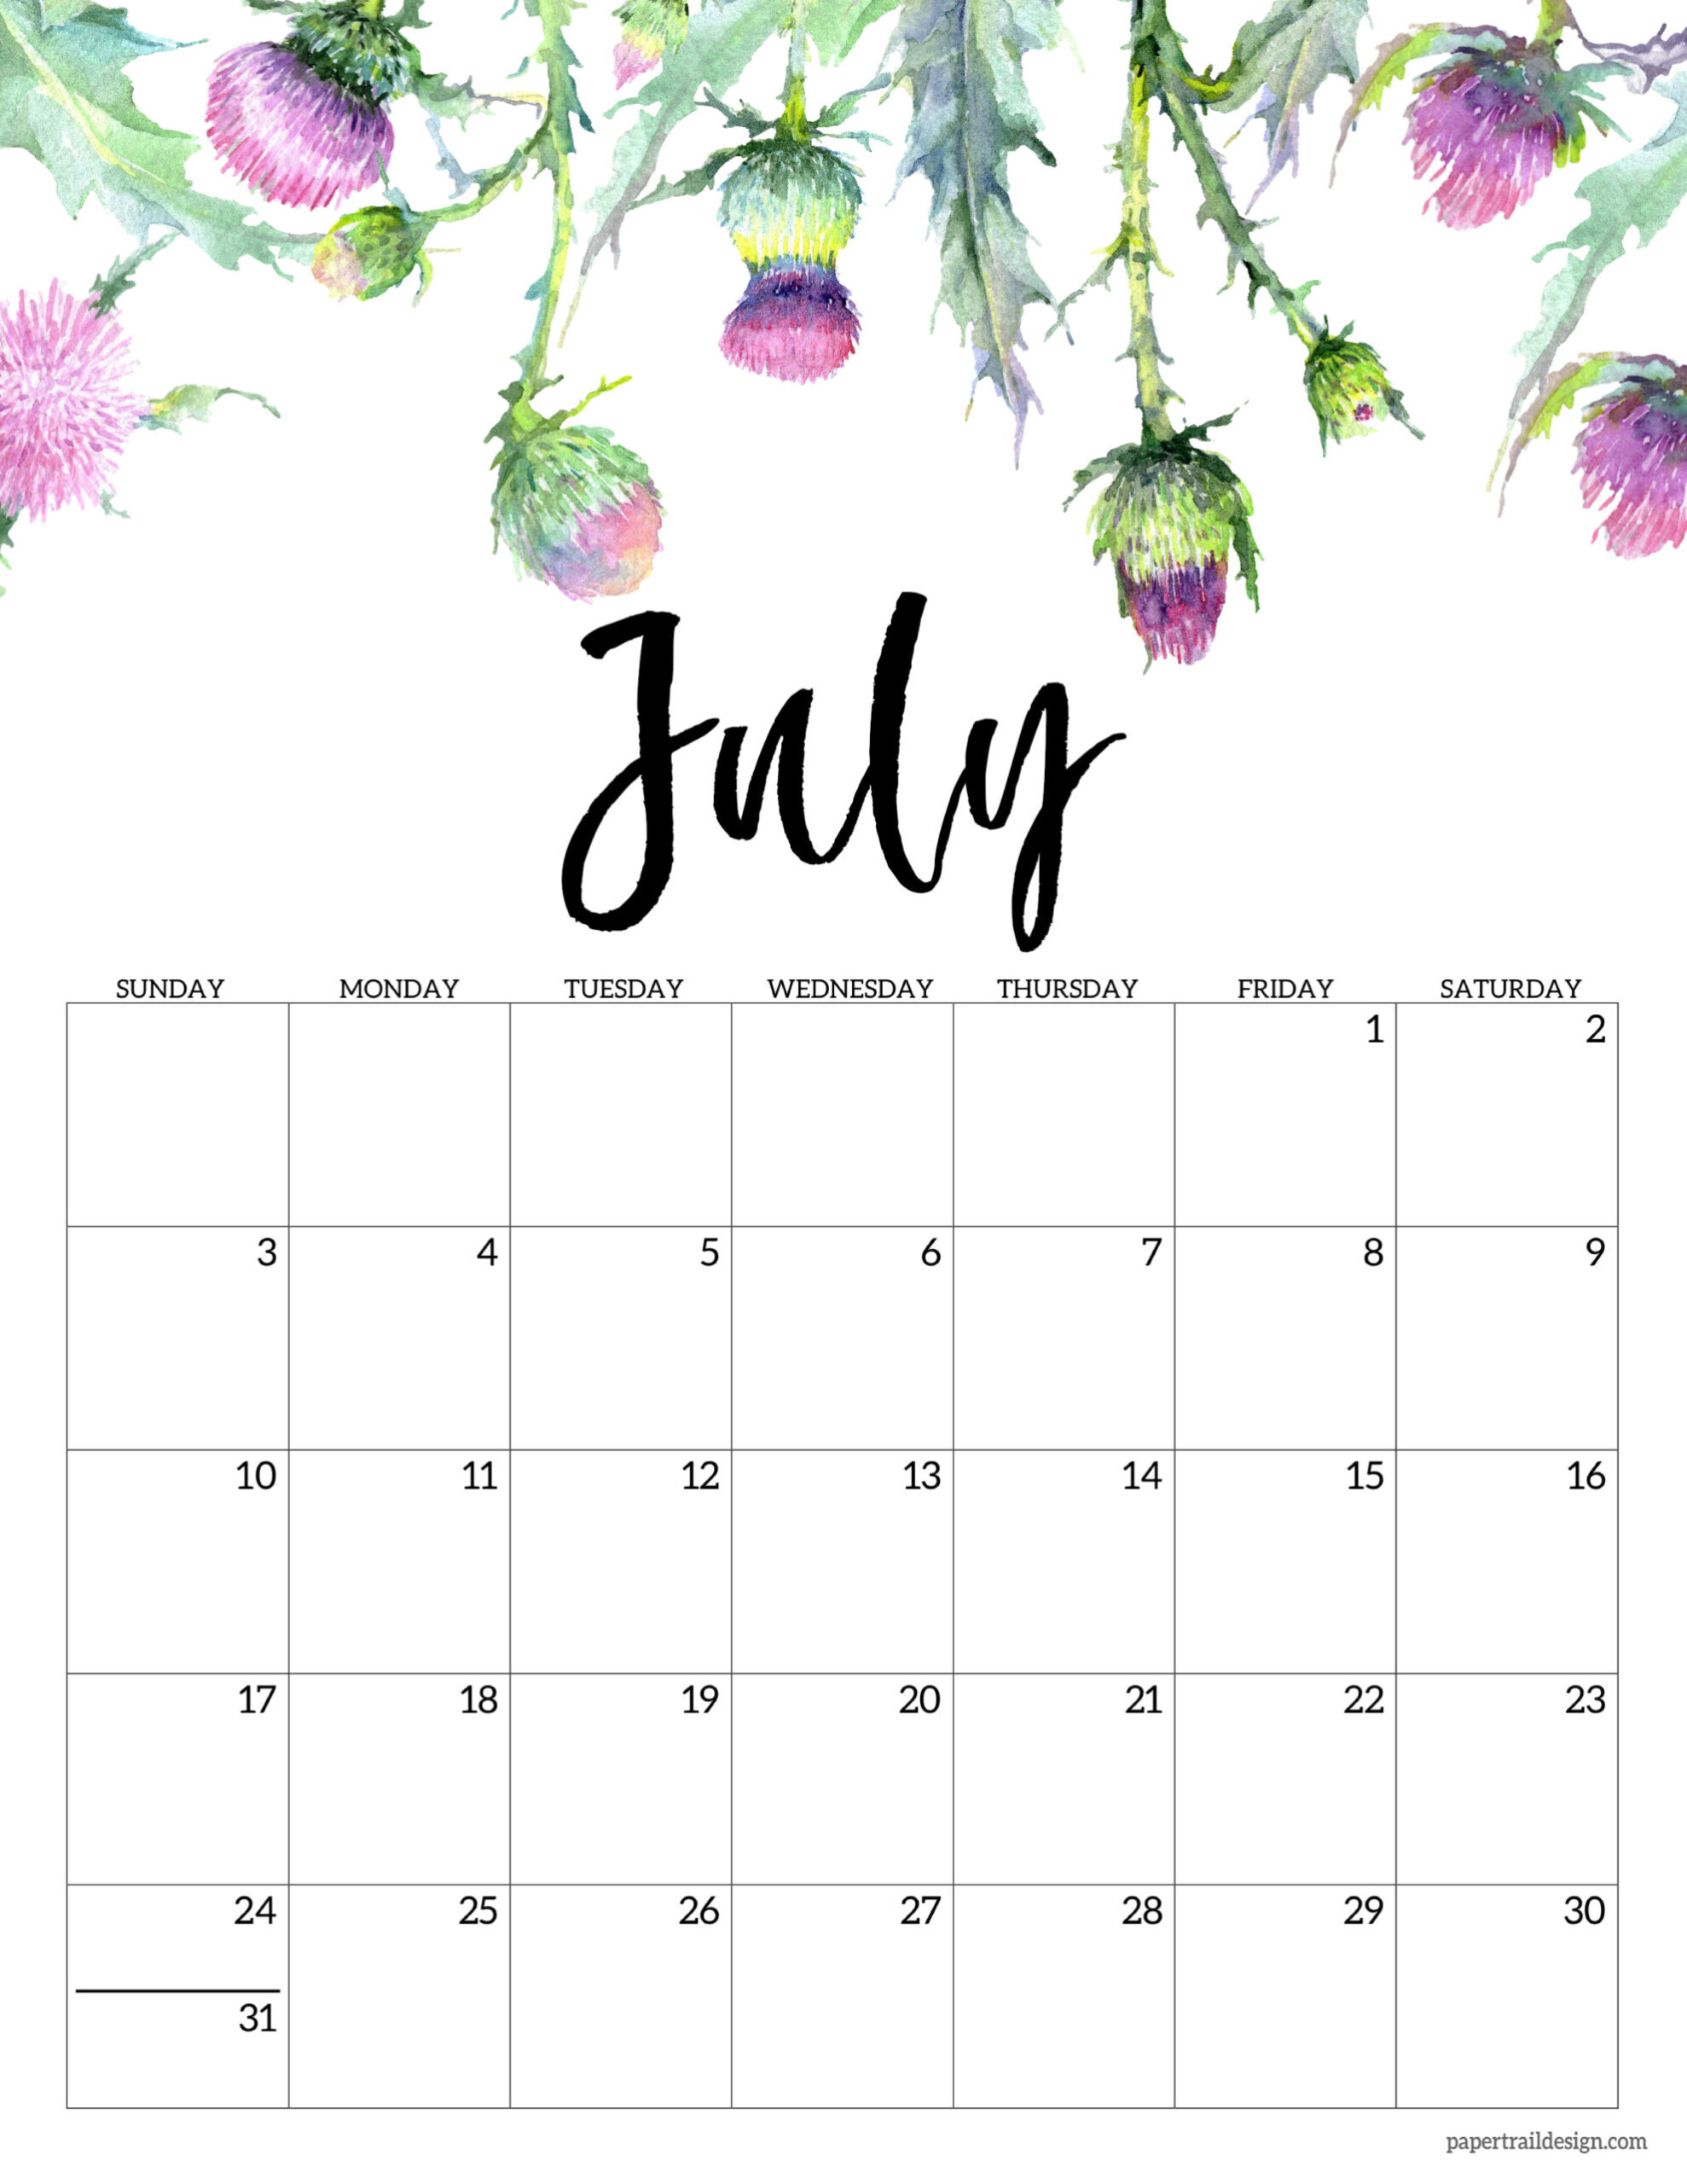 2022 Free Printable Calendar - Floral | Paper Trail Design